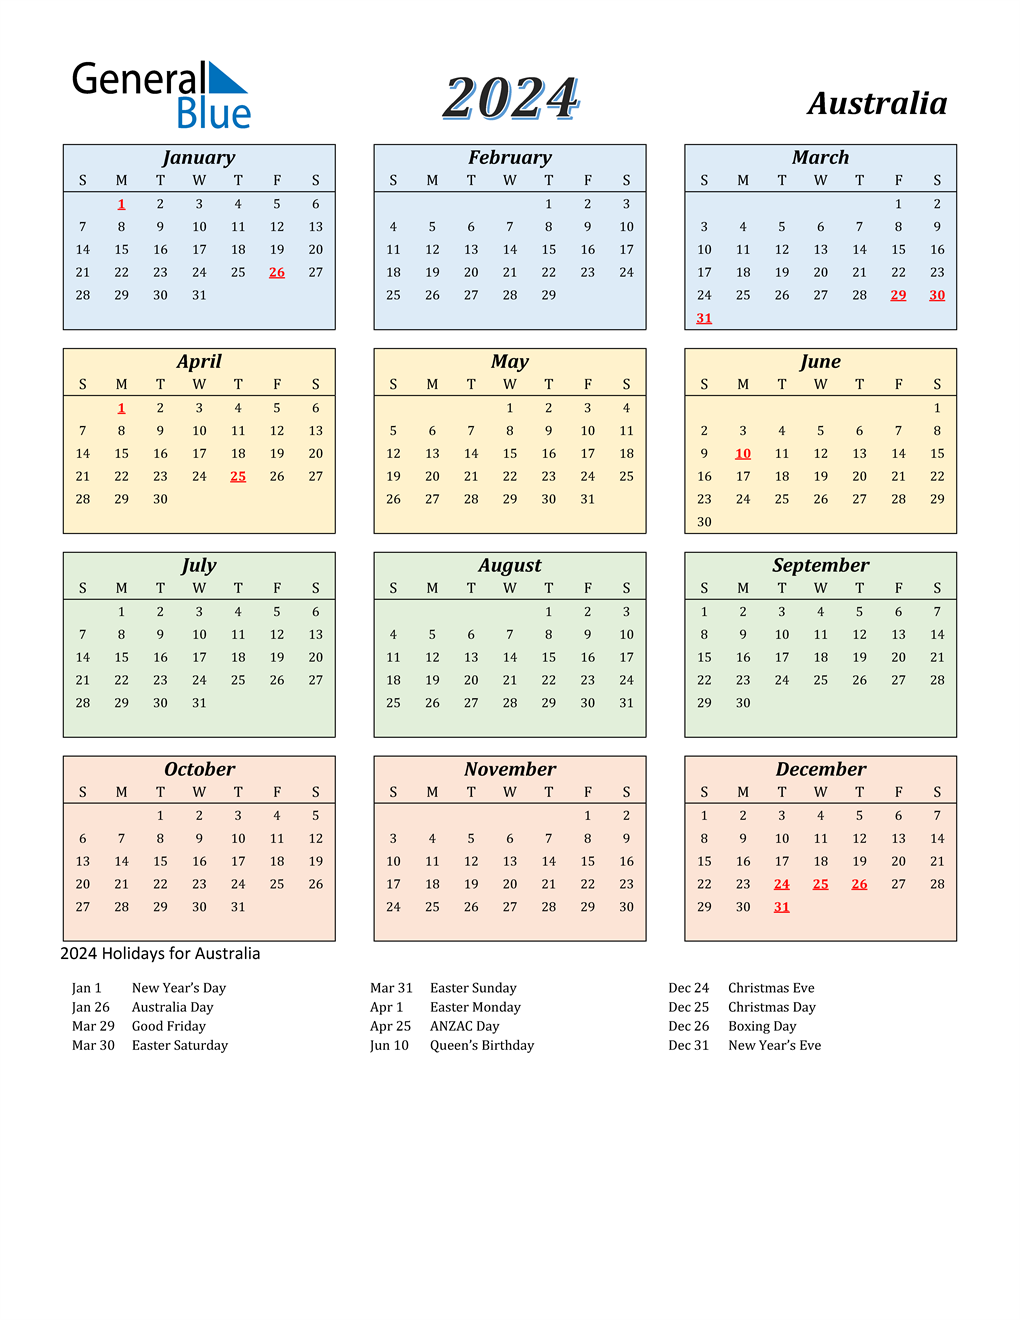 victoria-public-holidays-2023-calendar-calendar-2023-with-federal